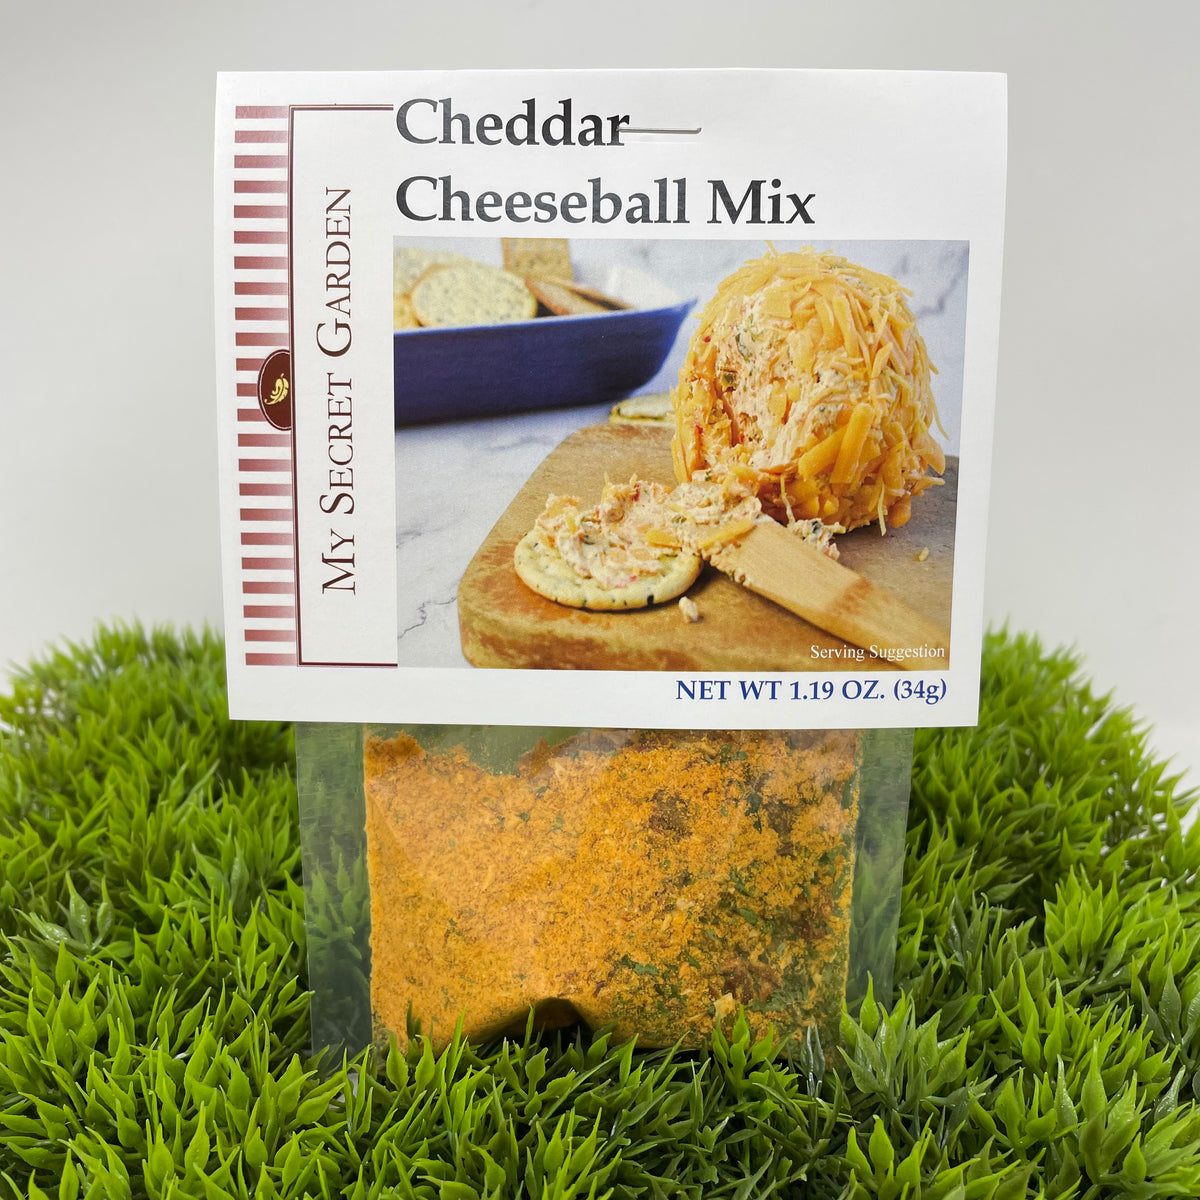 Cheddar Cheeseball Mix